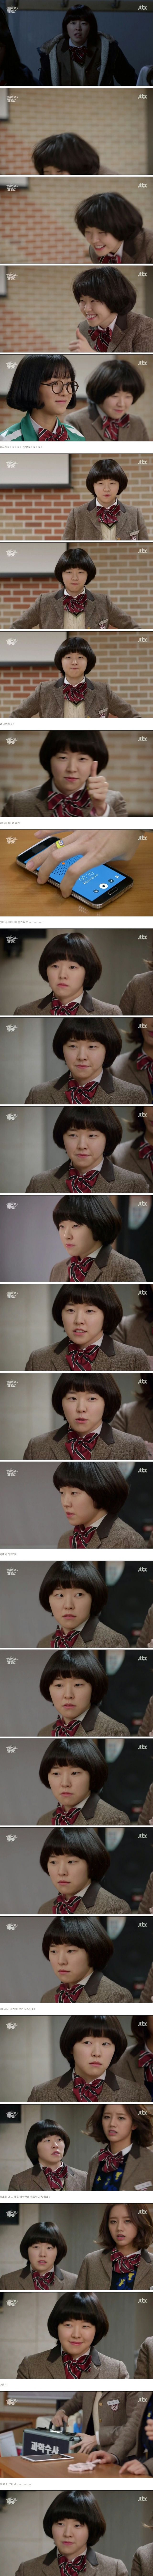 episode 4 captures for the Korean drama 'Seonam Girls High School Investigators'